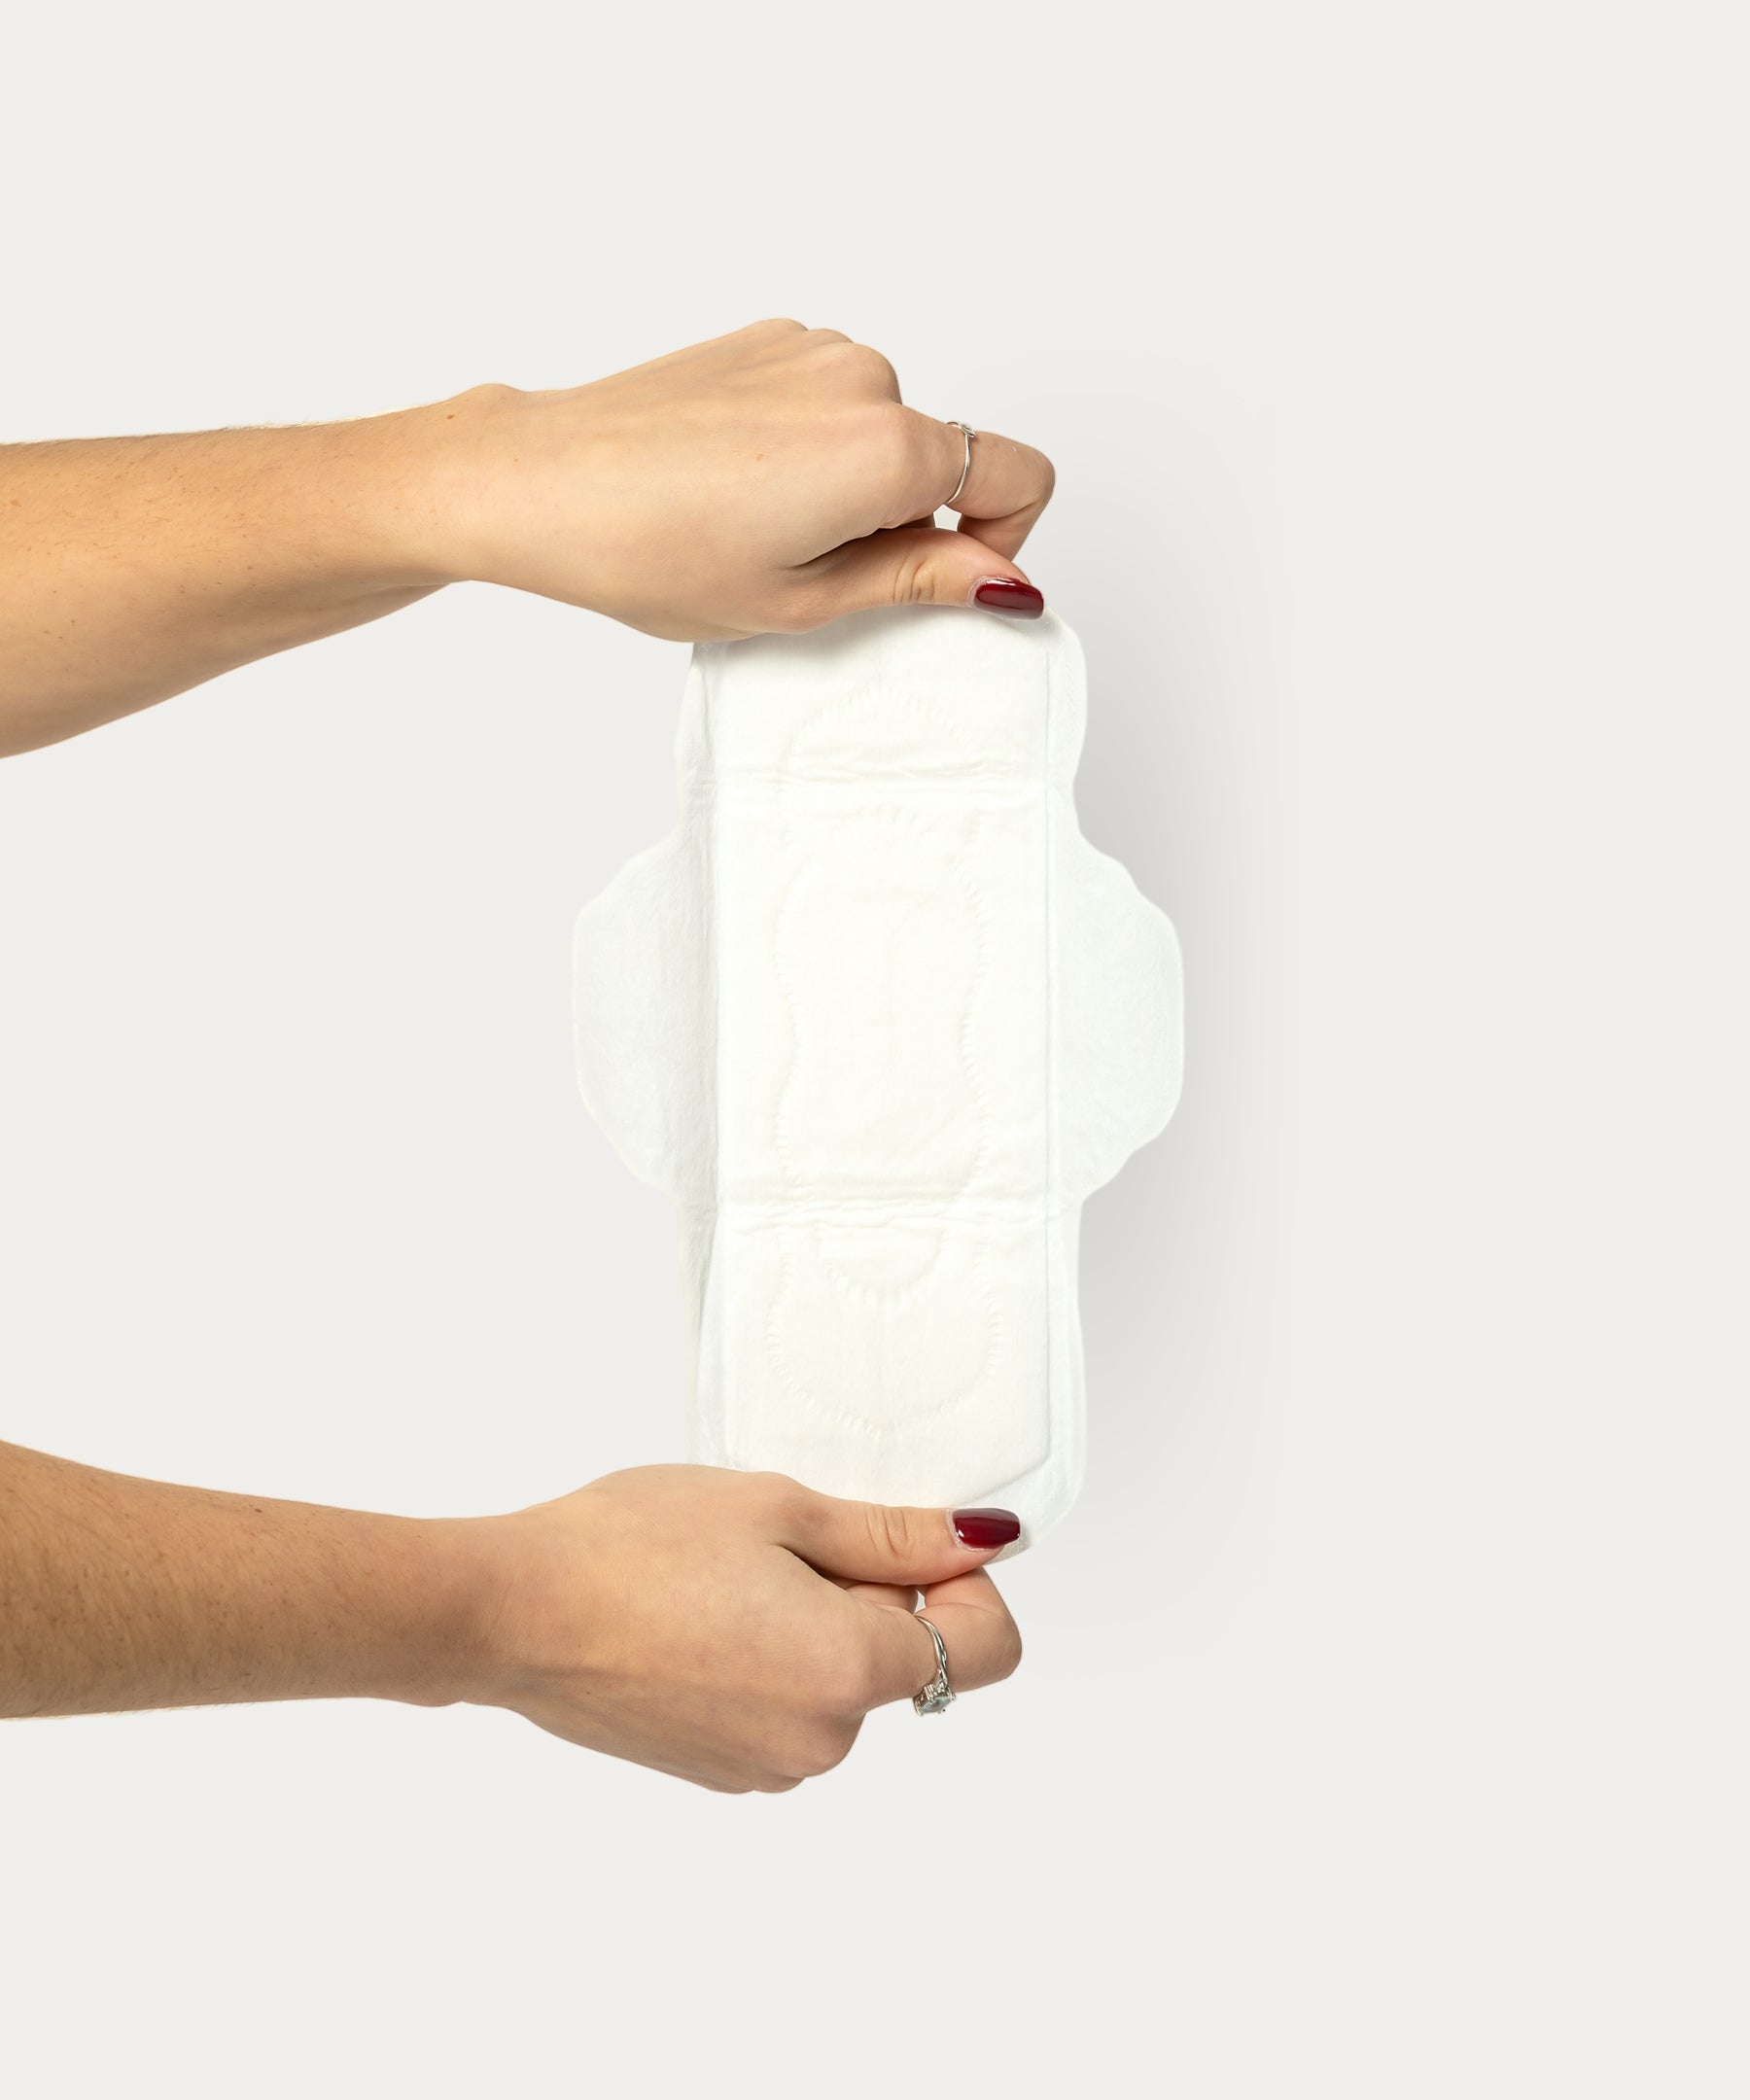 Organic Cotton Cover Menstrual Pads, Regular Absorbency (12-Pack) – Nyssa